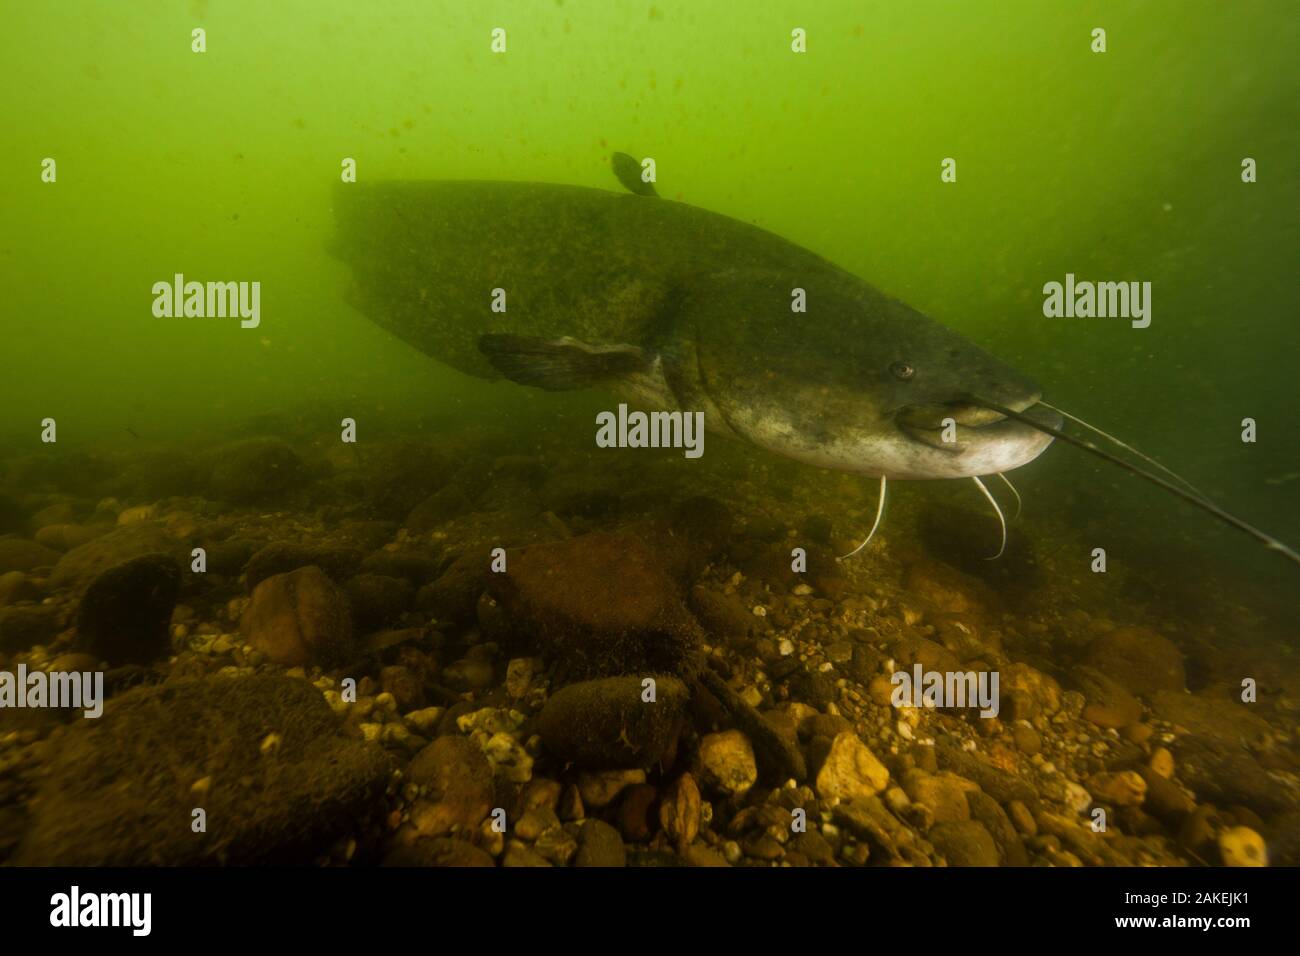 Wels catfish (Silurus glanis) underwater, Tarn River, France August Stock Photo